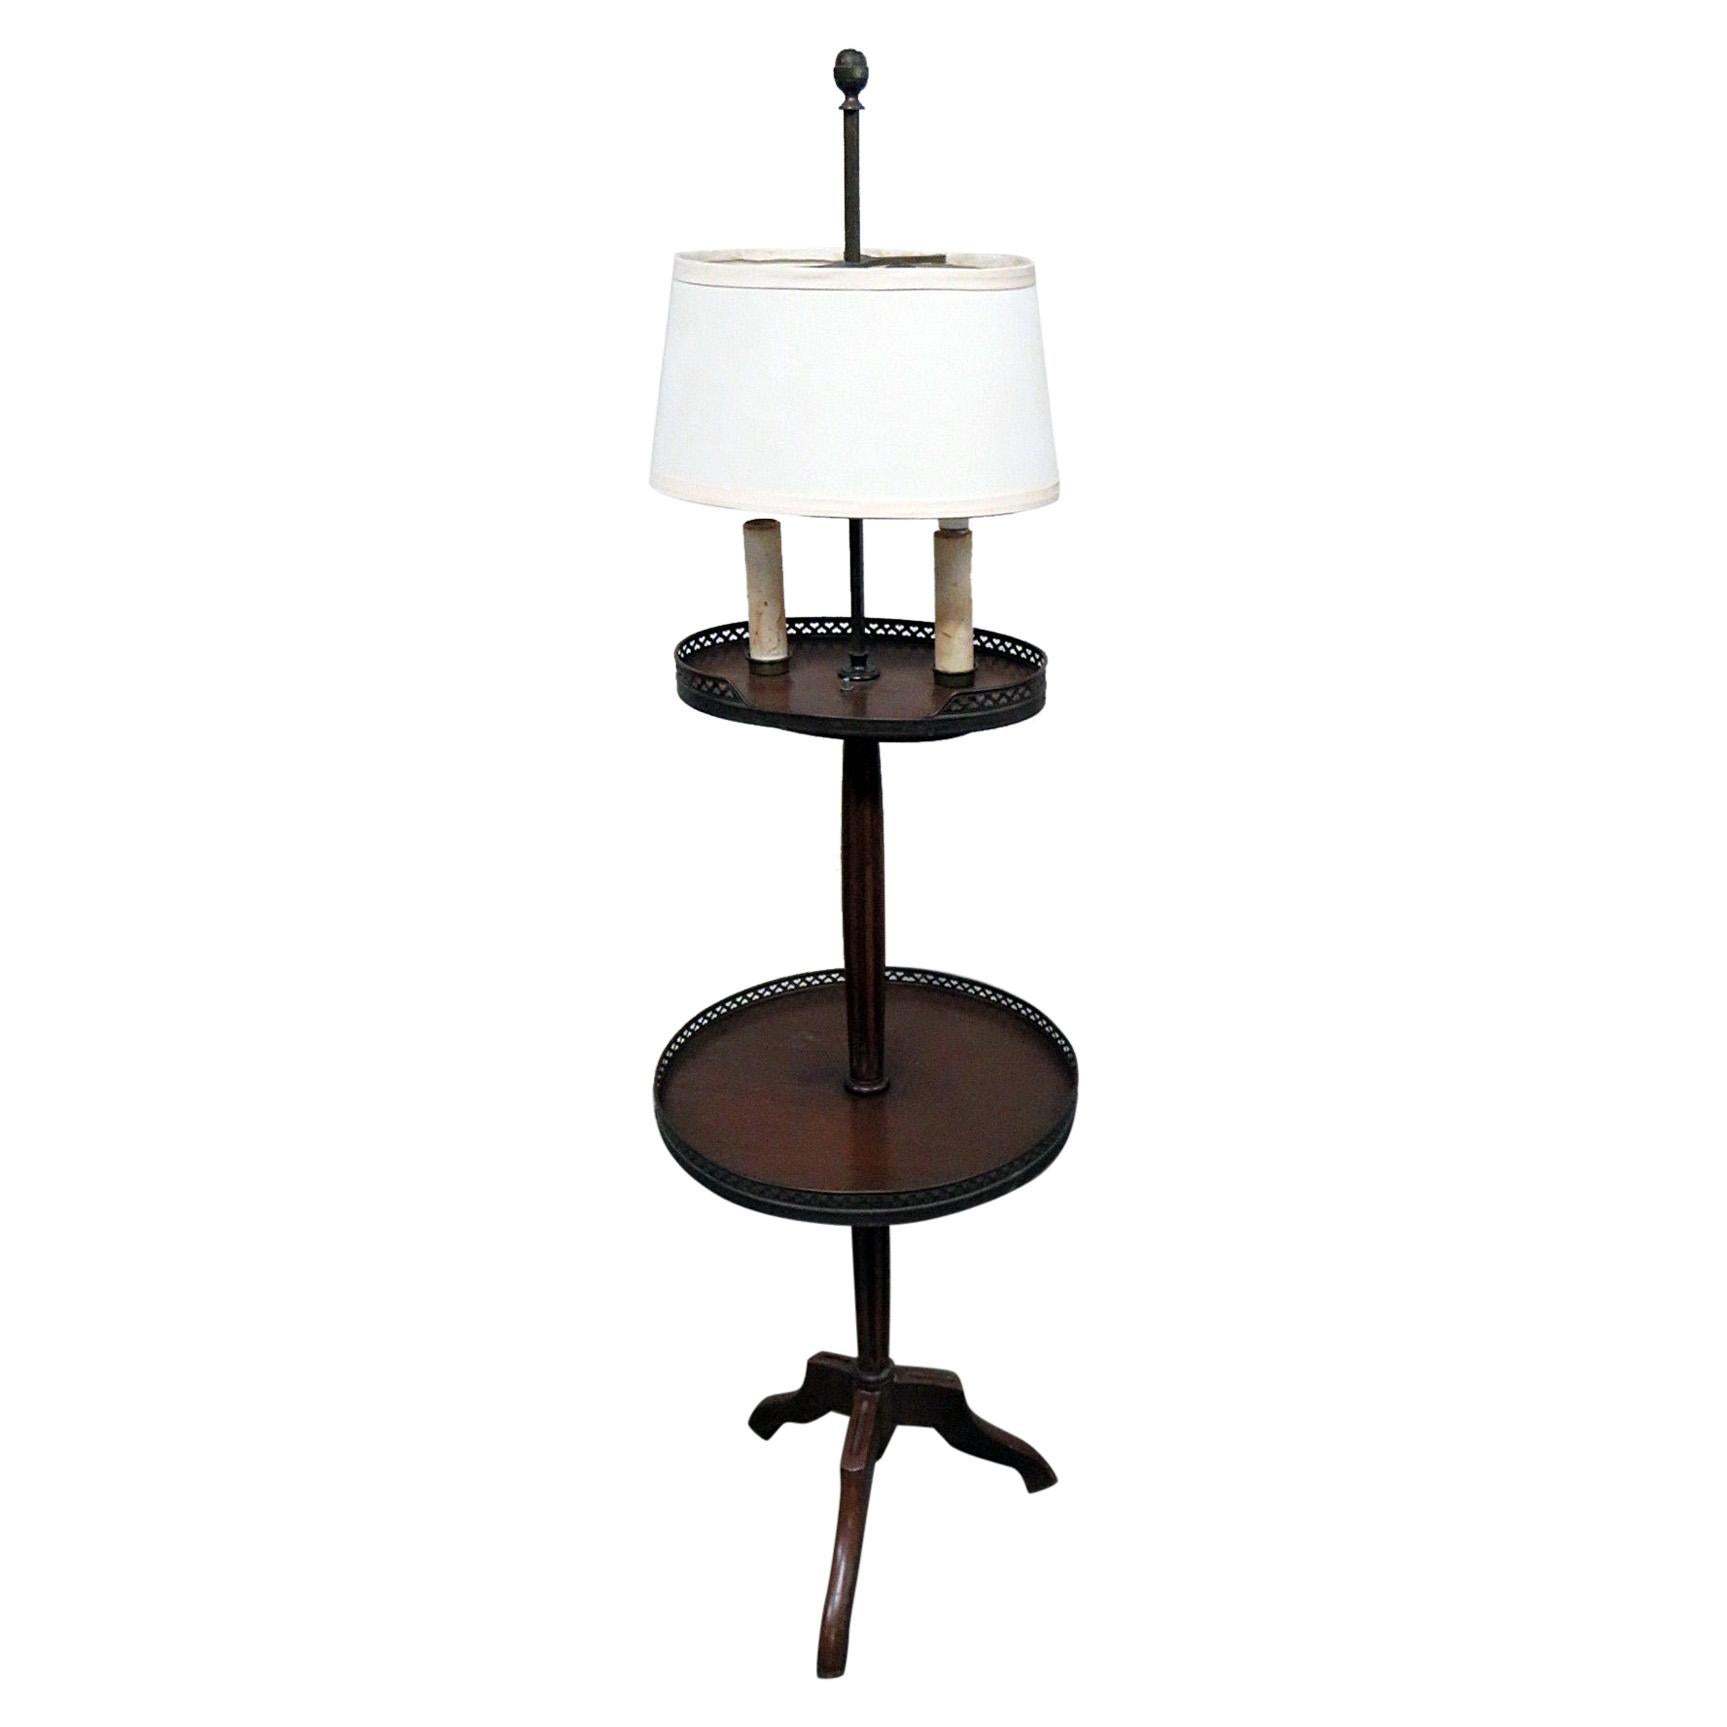 Antique 2-Tier Lamp Table